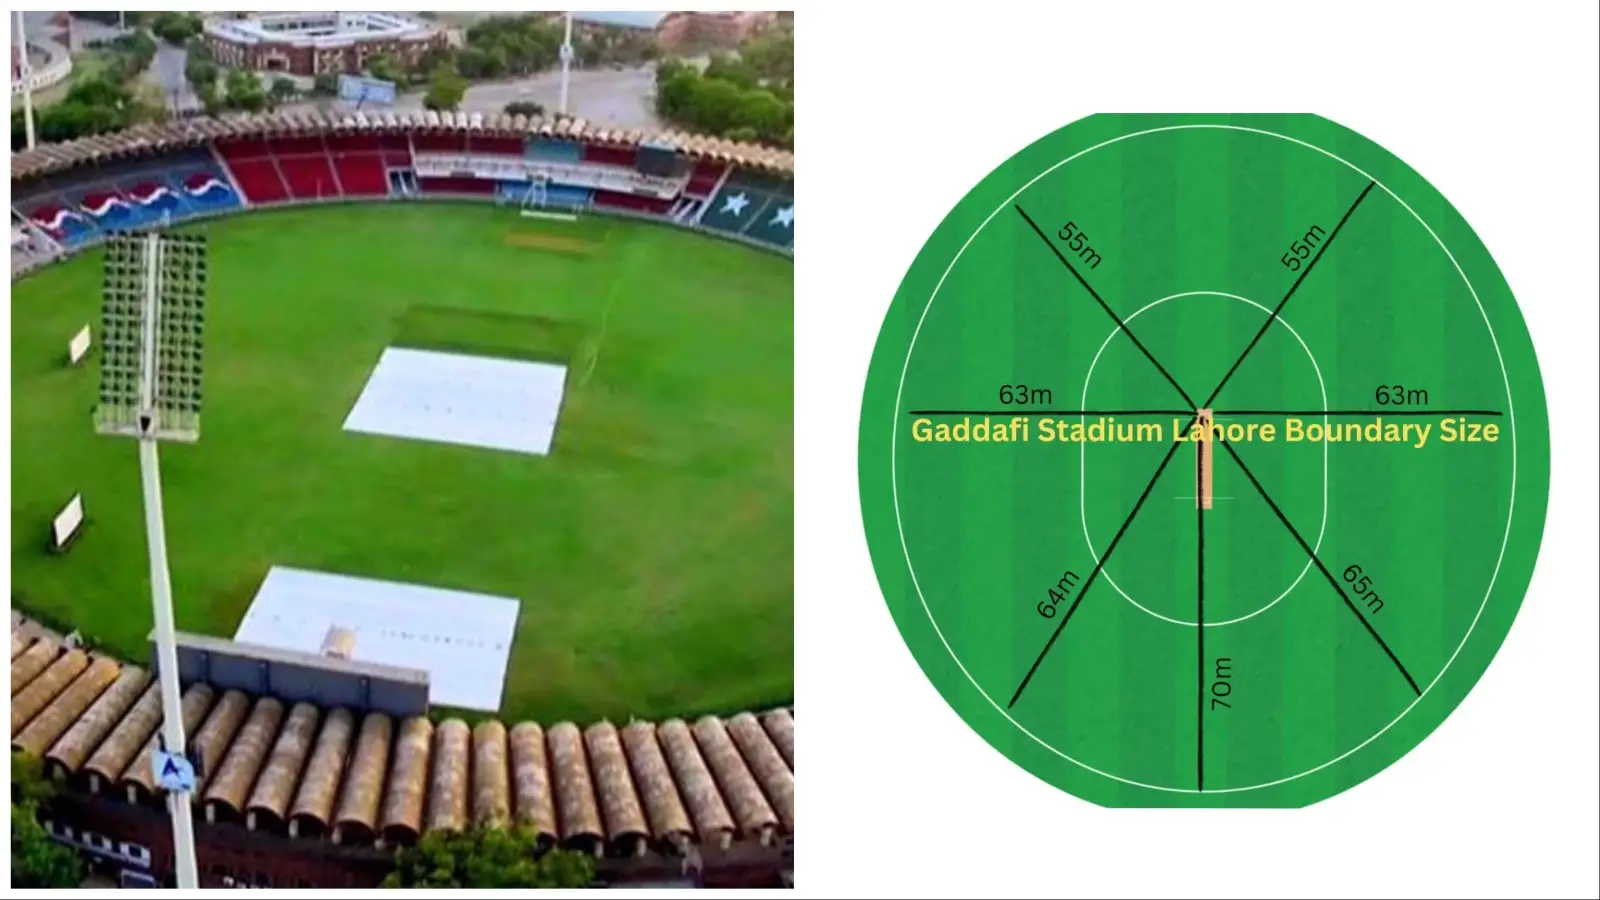 Gaddafi Stadium Lahore Boundary Length And Seating Capacity